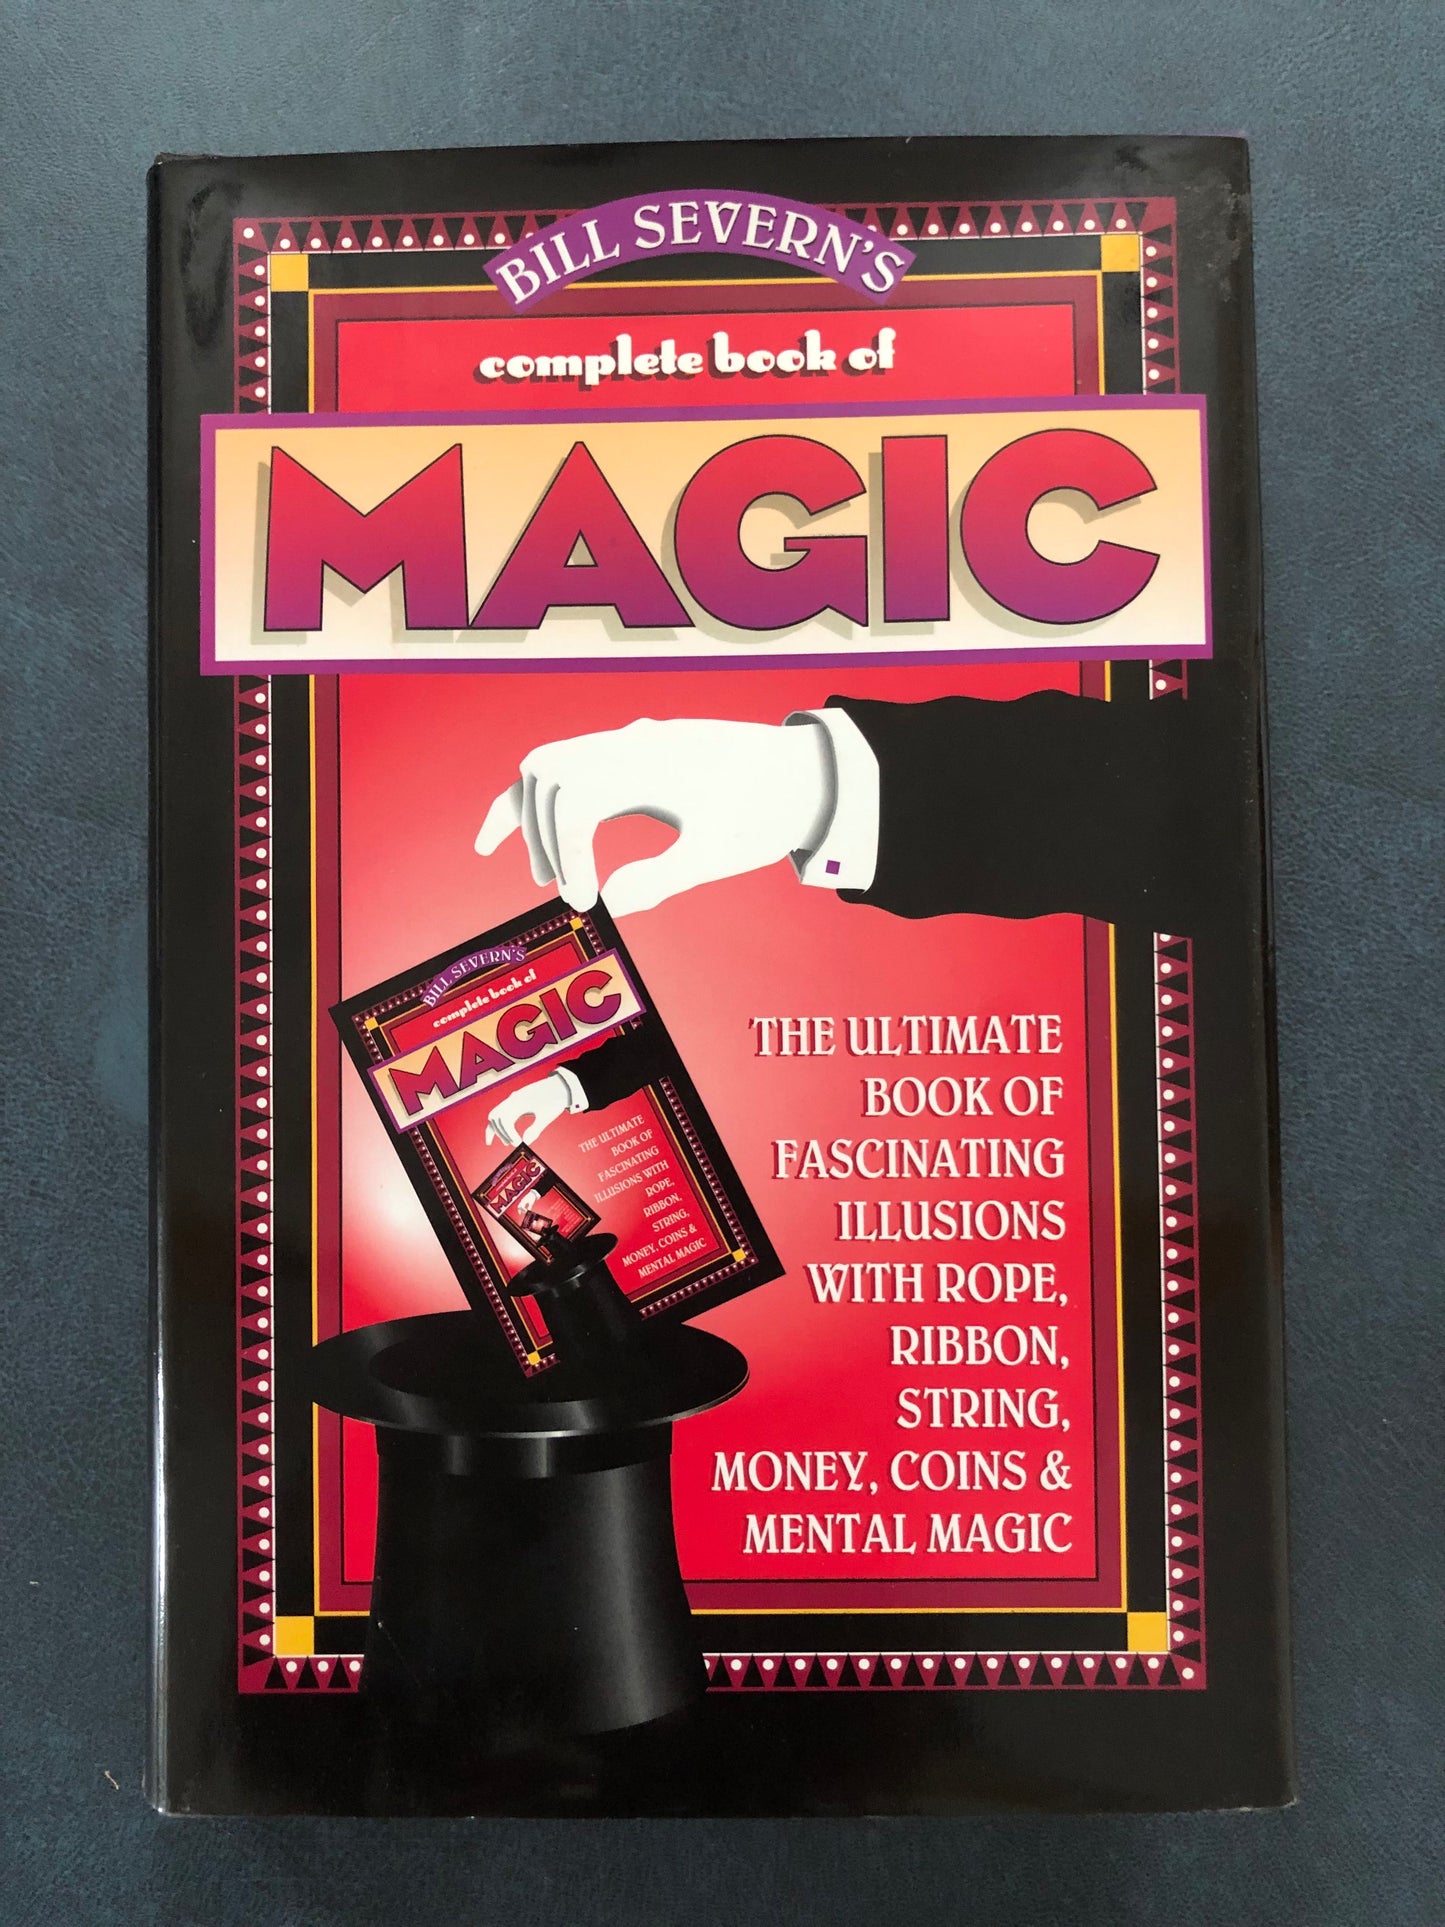 Bill Severn's Complete Book of Magic